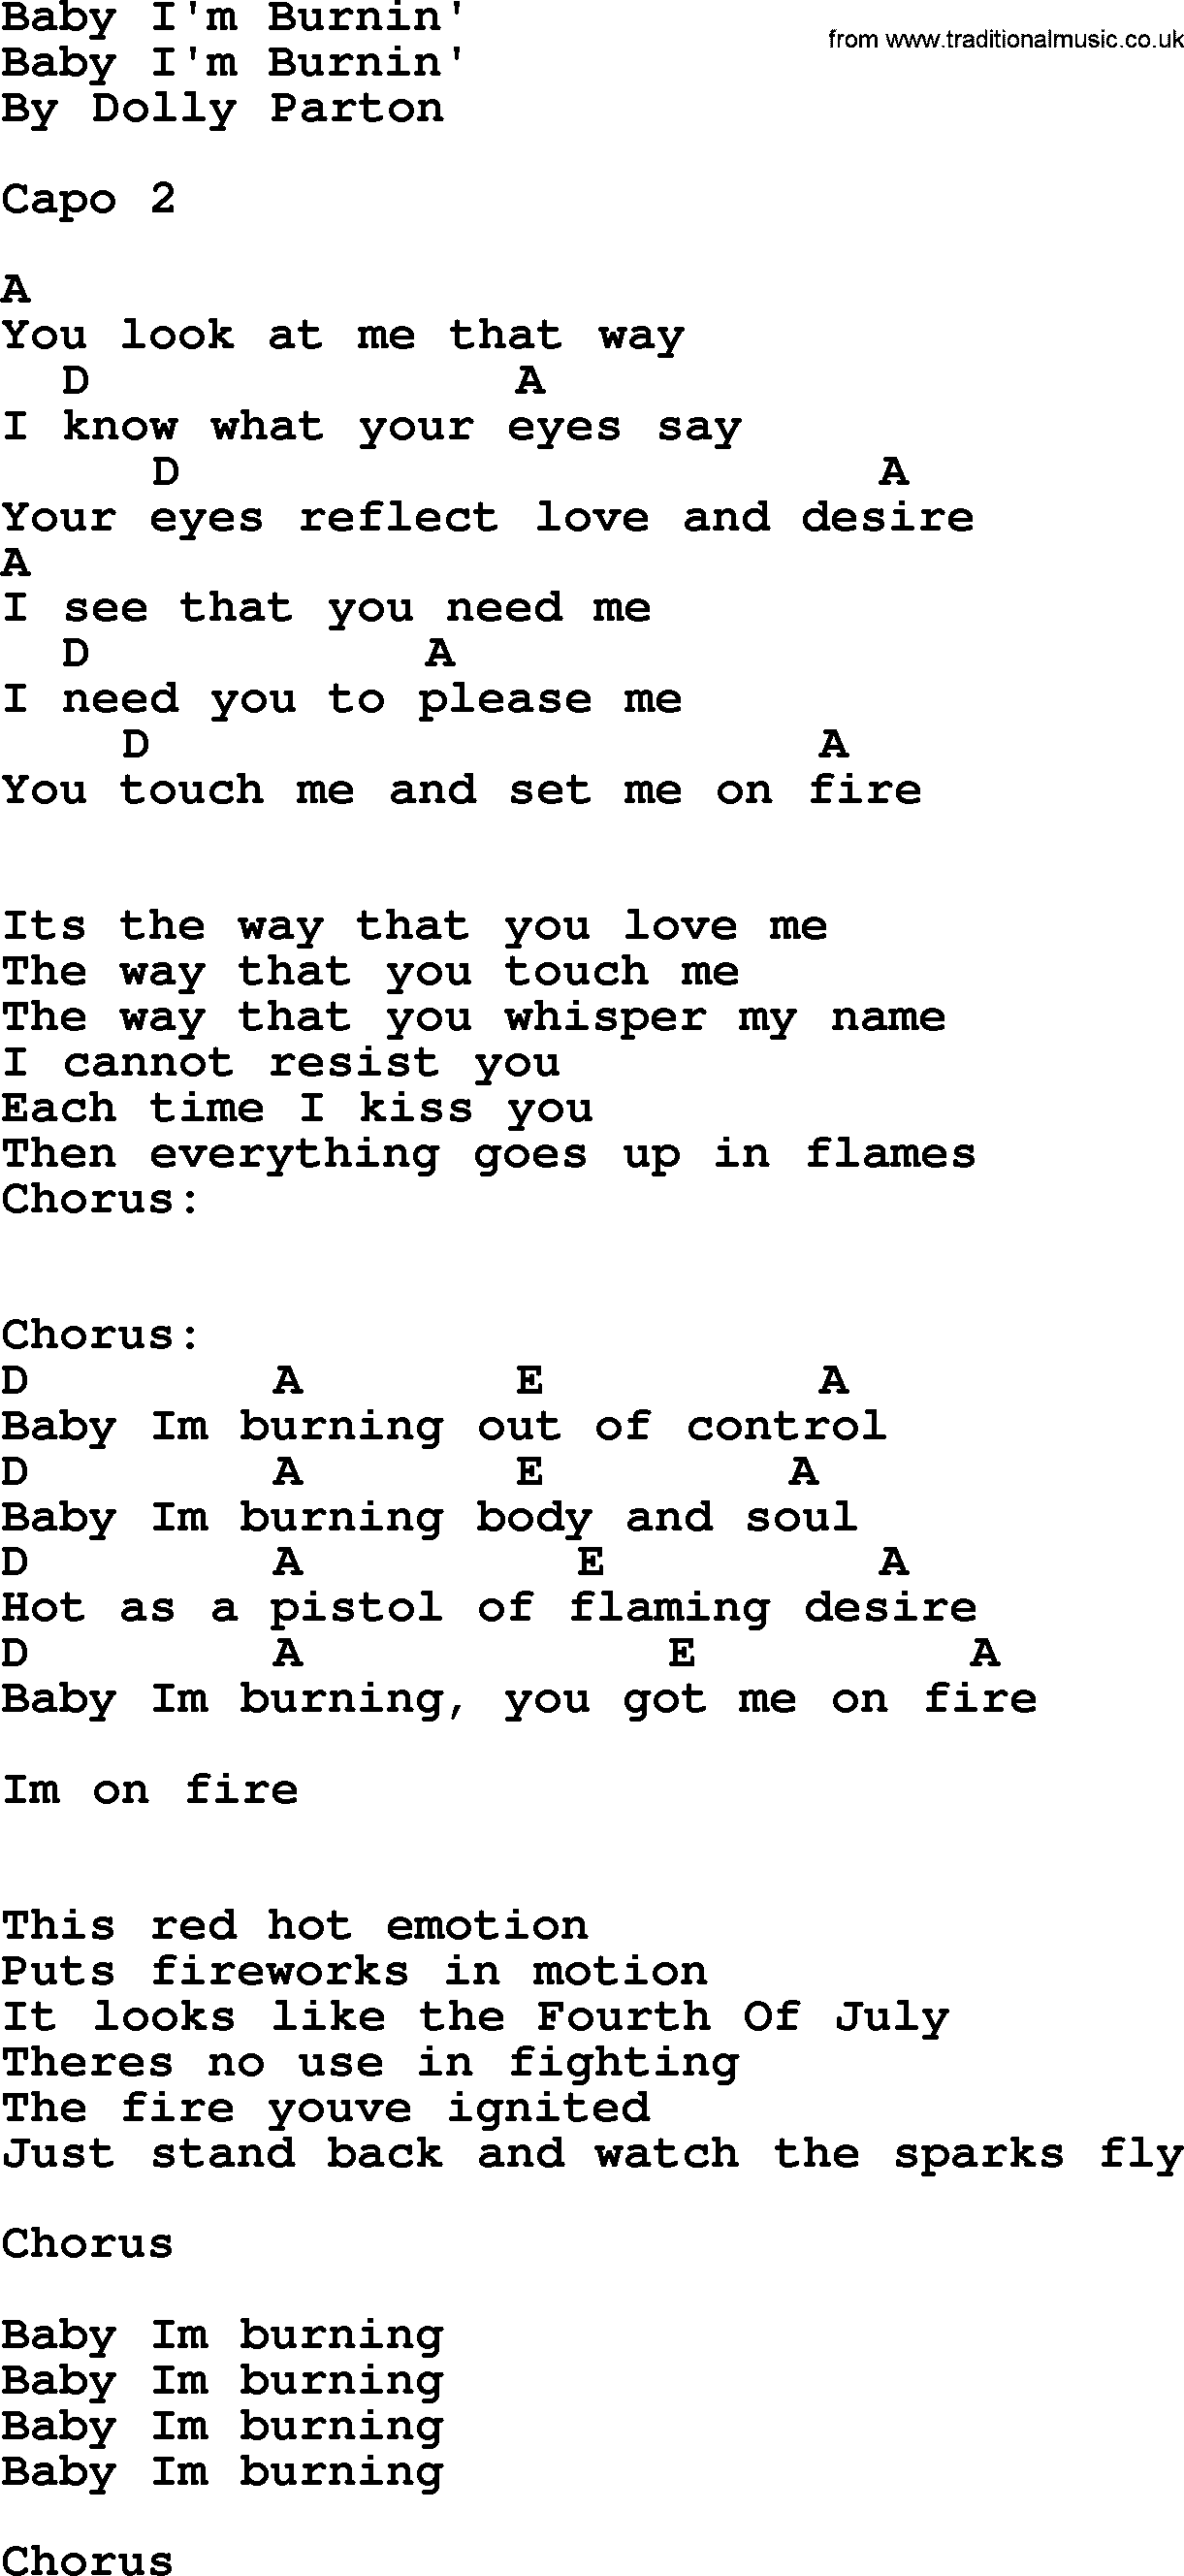 Dolly Parton song Baby I'm Burnin', lyrics and chords